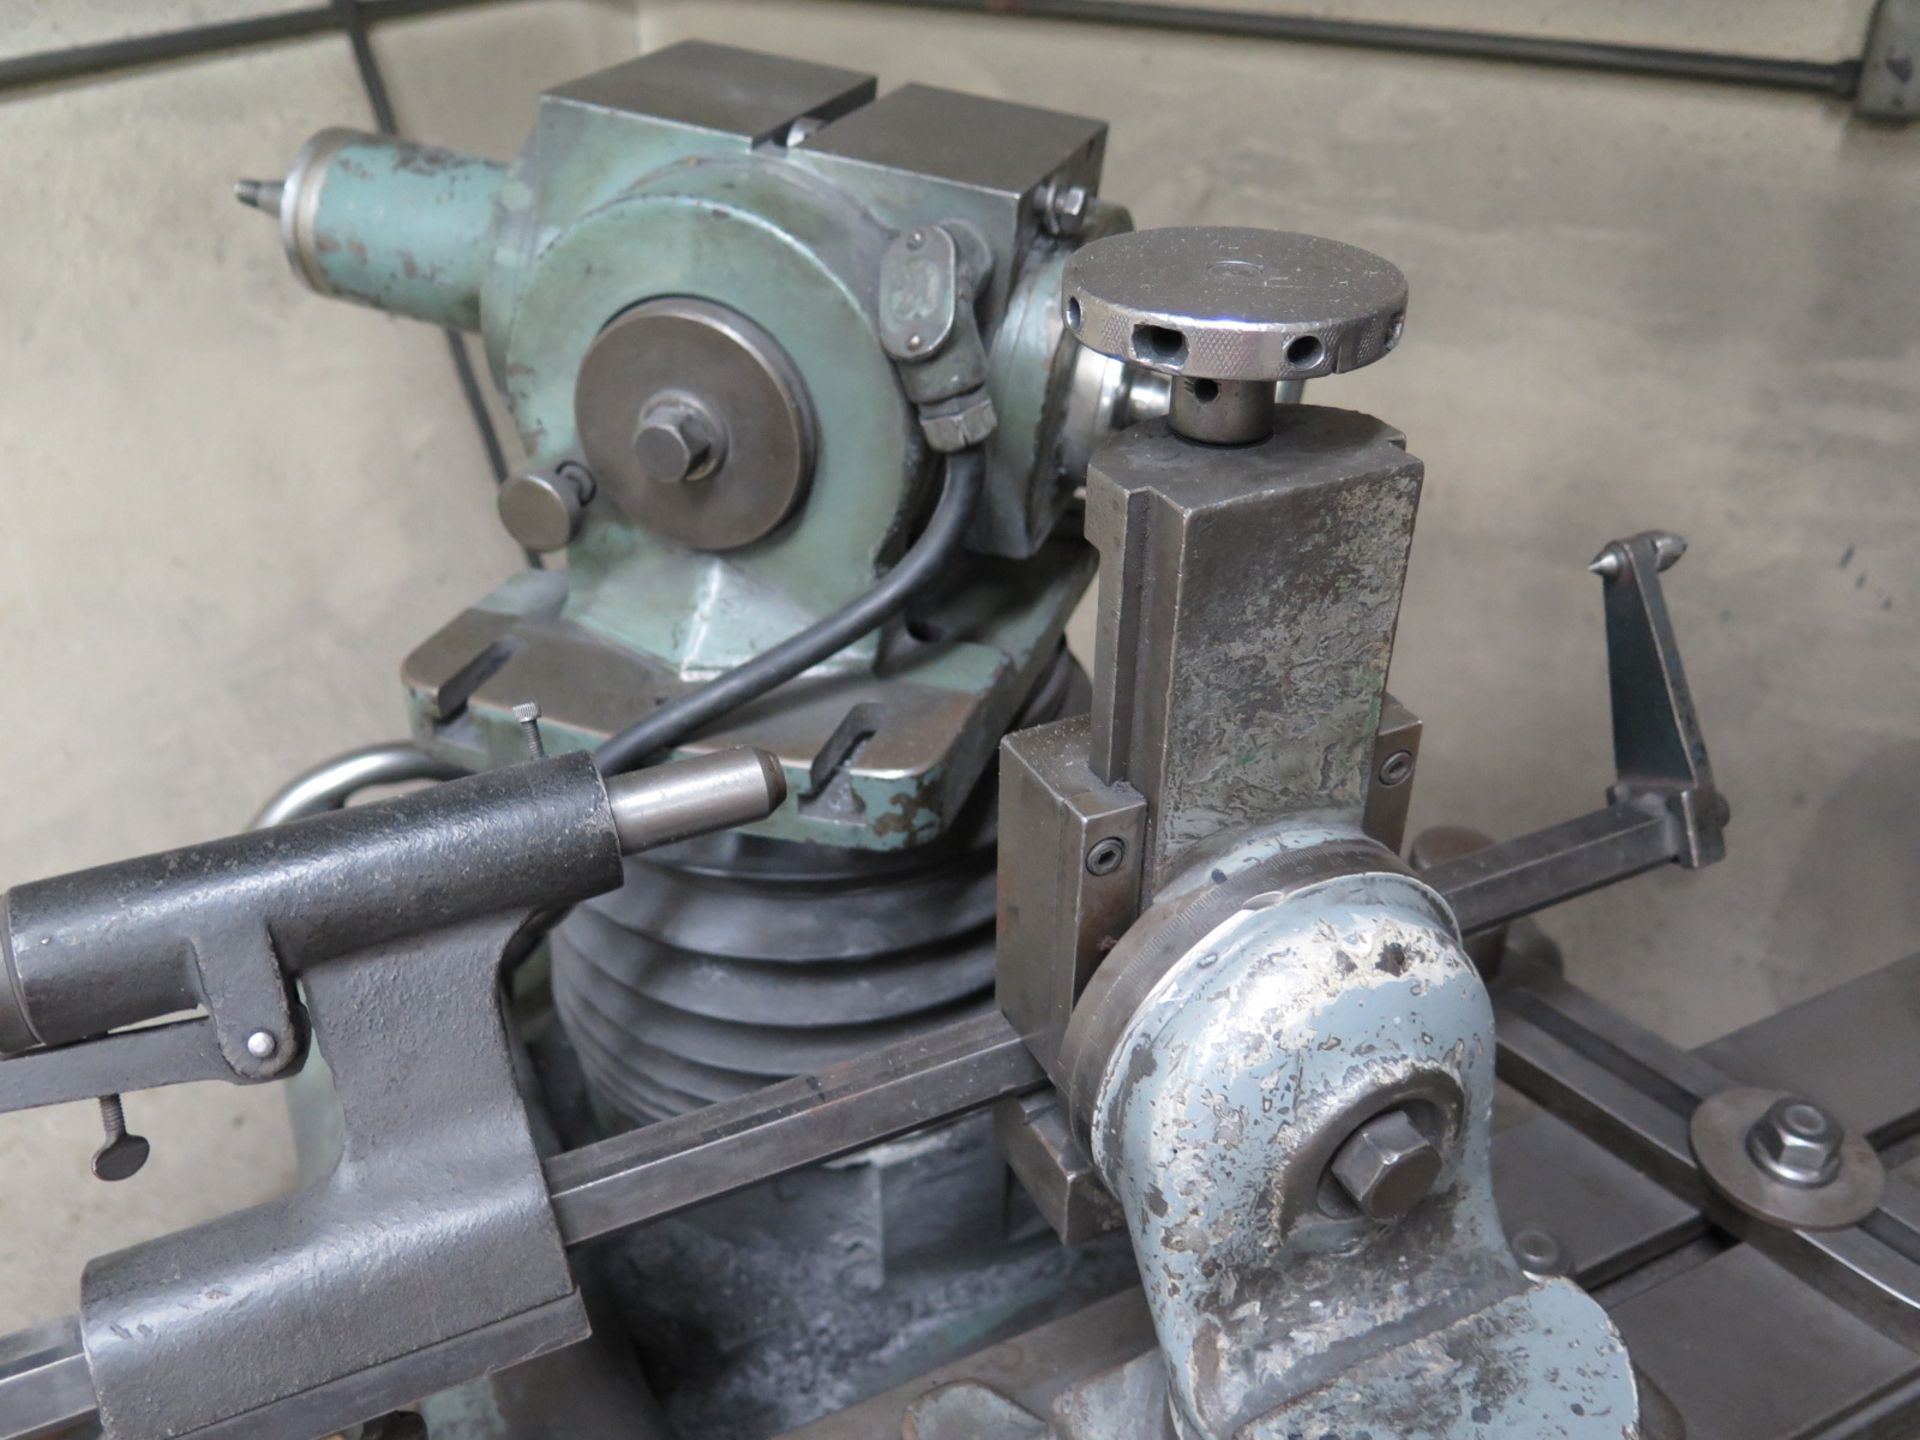 Cincinnati Tool and Cutter Grinder s/n 1D2T1Y-135 w/ Compound Grinding Head, Motorized 5C Work Head - Image 3 of 5